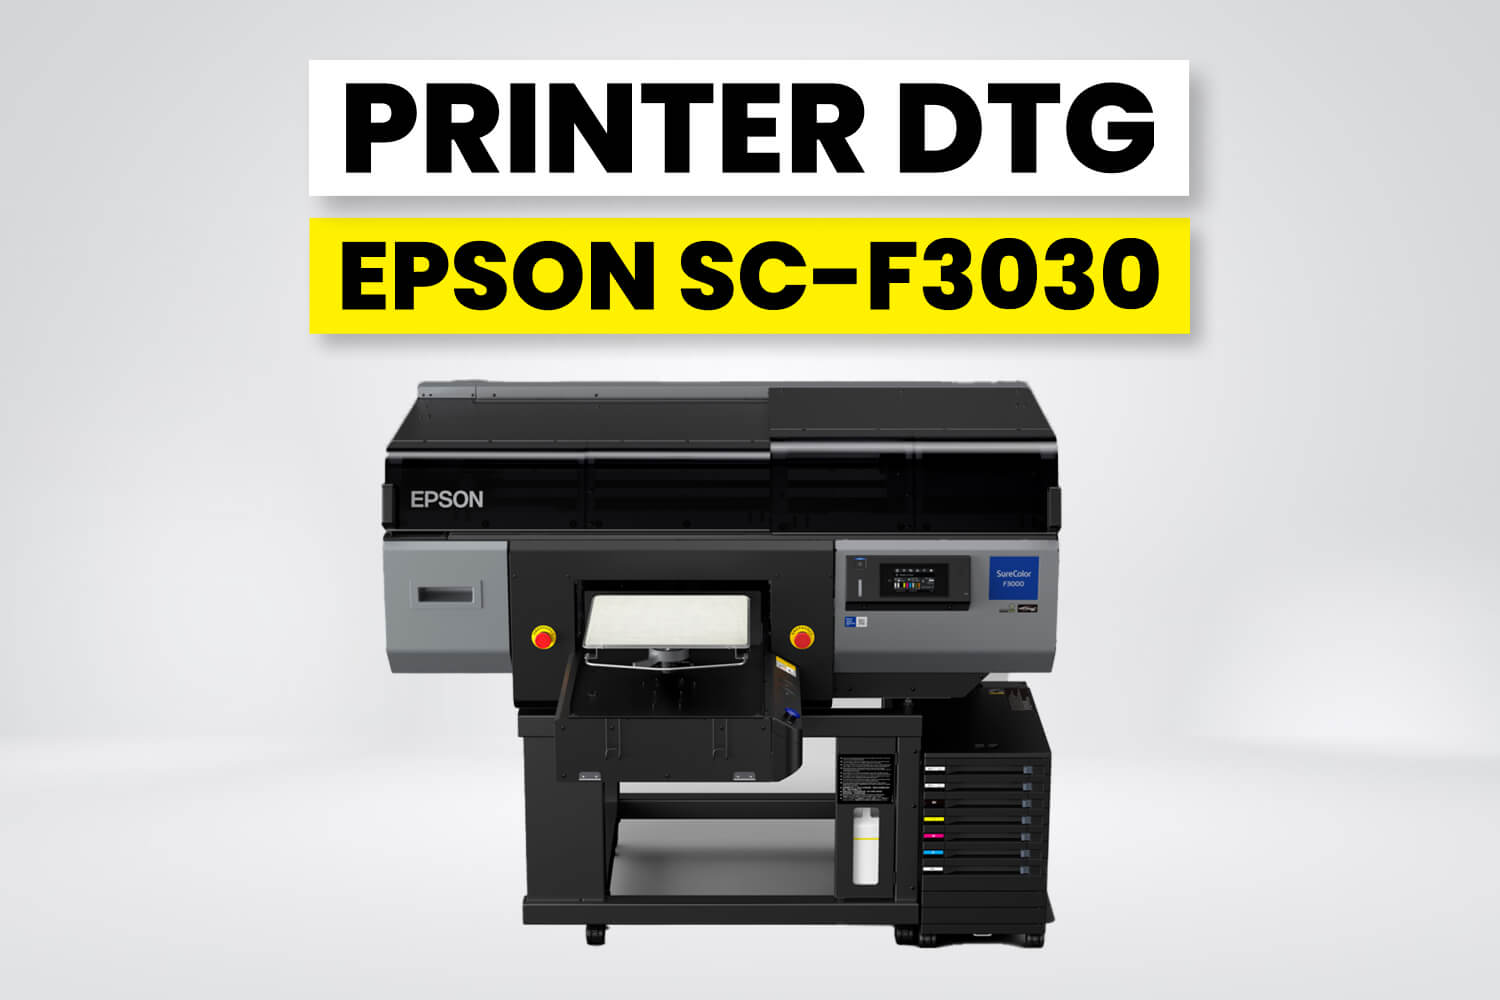 Printer Dtg Epson Surecolor Sc-F3030 1 Laysander